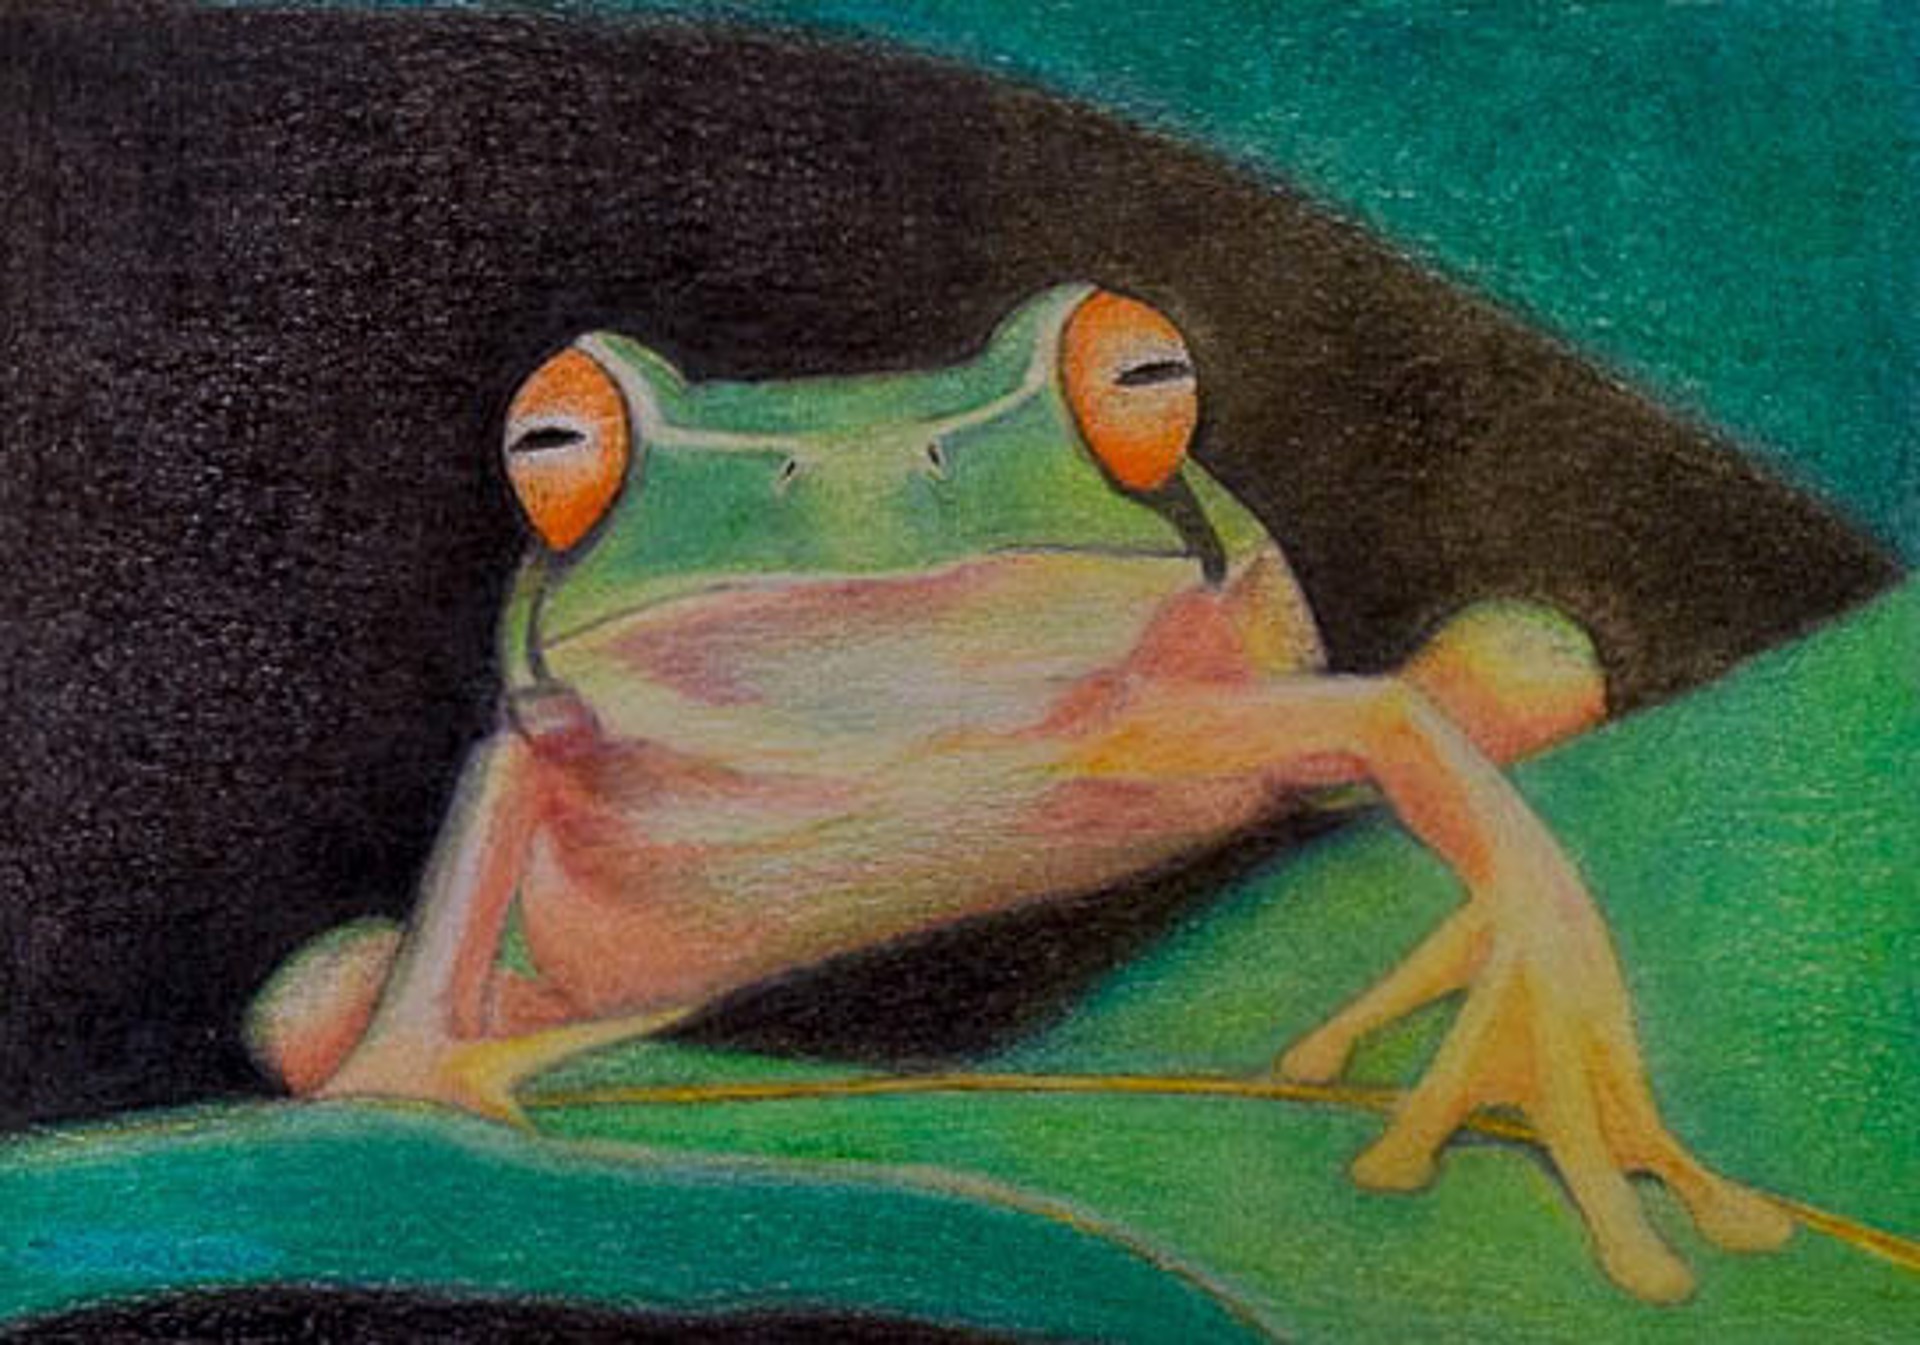 The Frog by D. Wayne Cochran